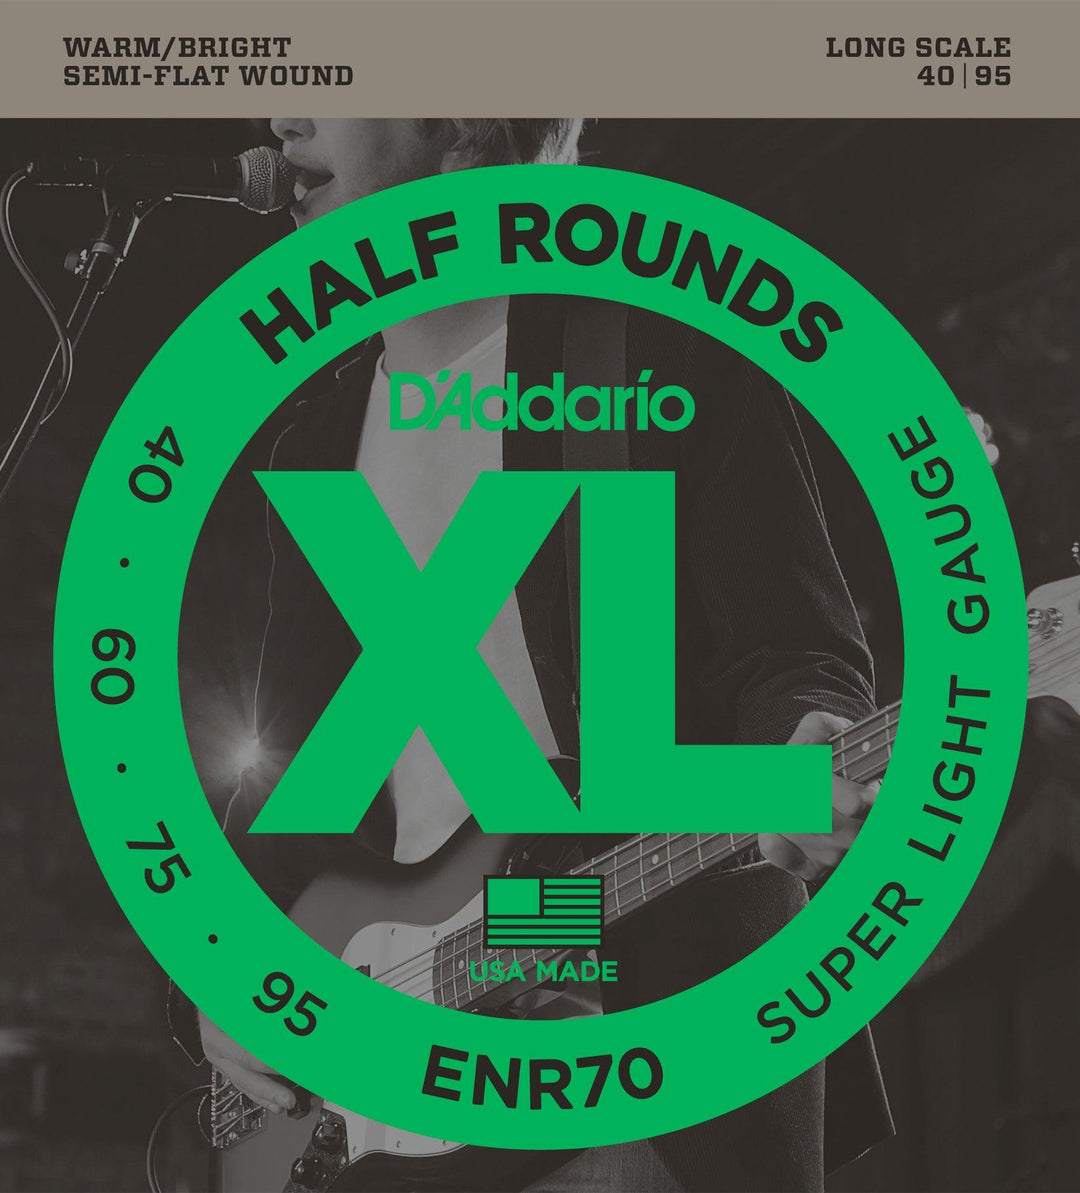 D'Addario XL Half Round Bass Guitar String Set, ENR70 Super Light .040-.095 Long Scale - A Strings